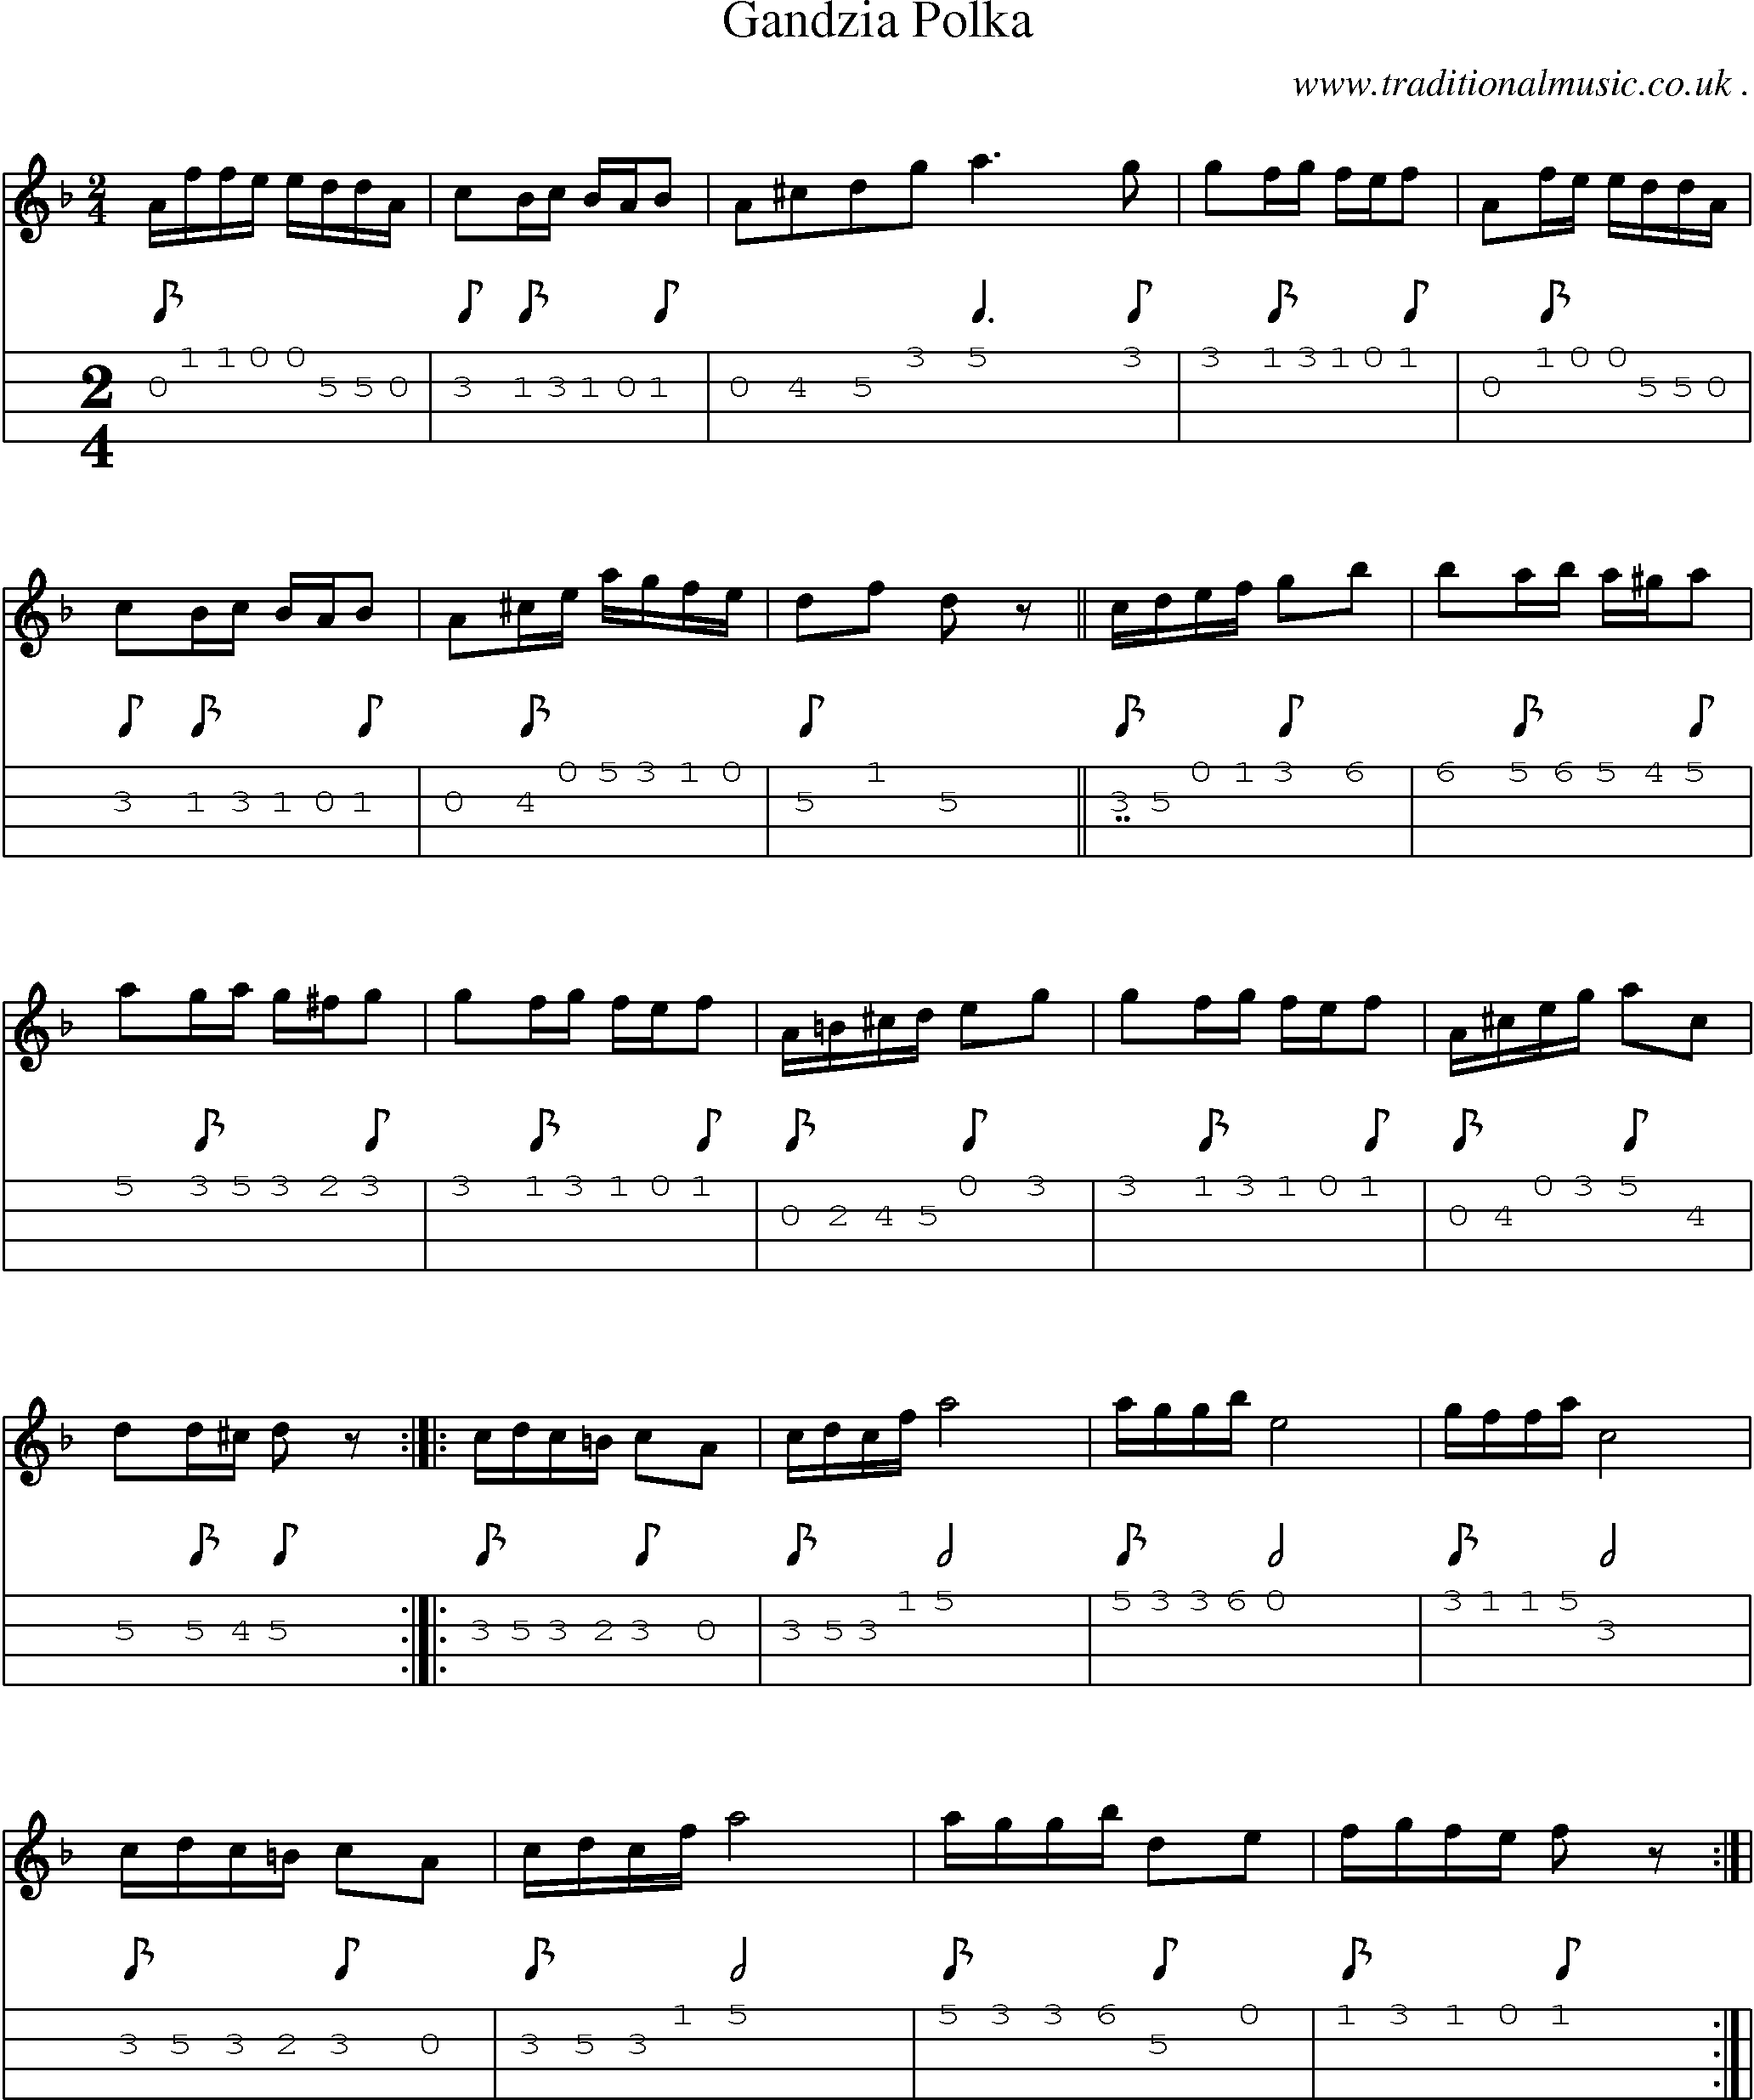 Sheet-Music and Mandolin Tabs for Gandzia Polka